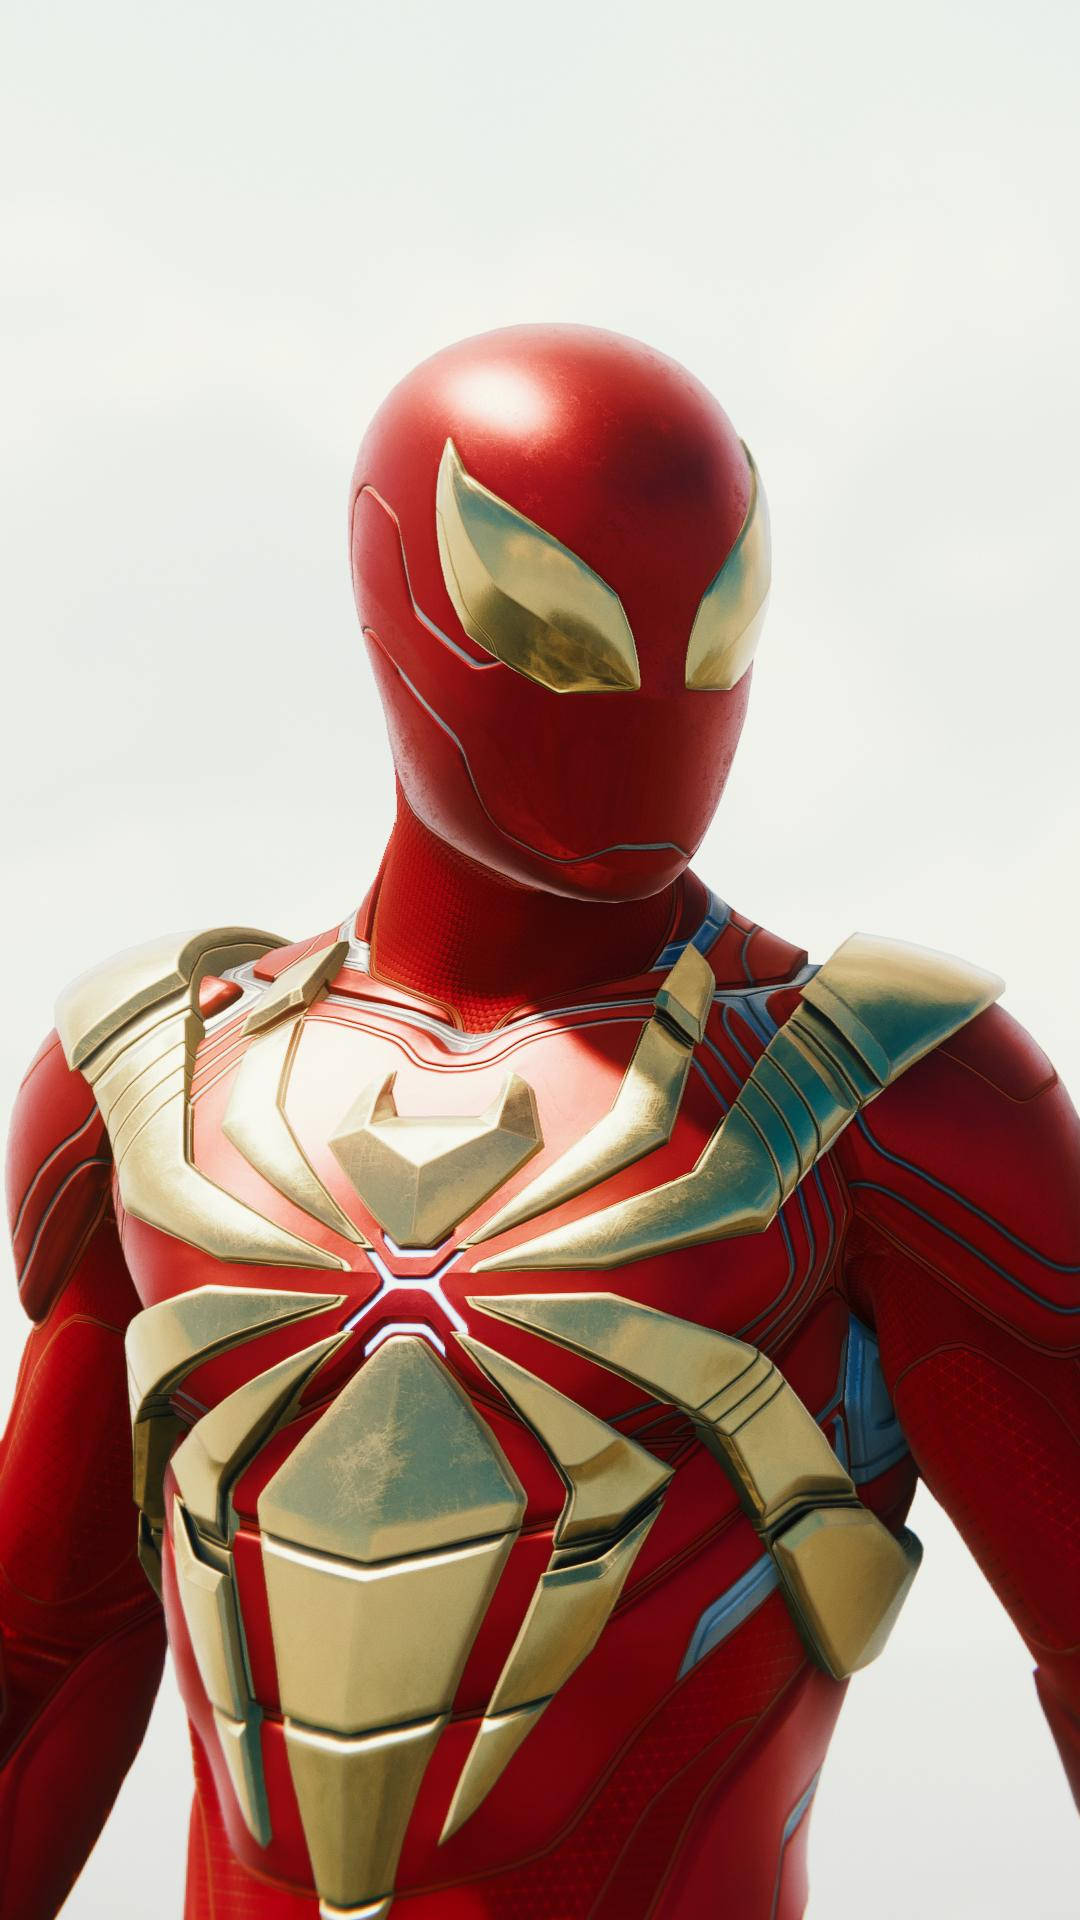 Spiderman Glossy Iron Spider Gold Armor Wallpaper